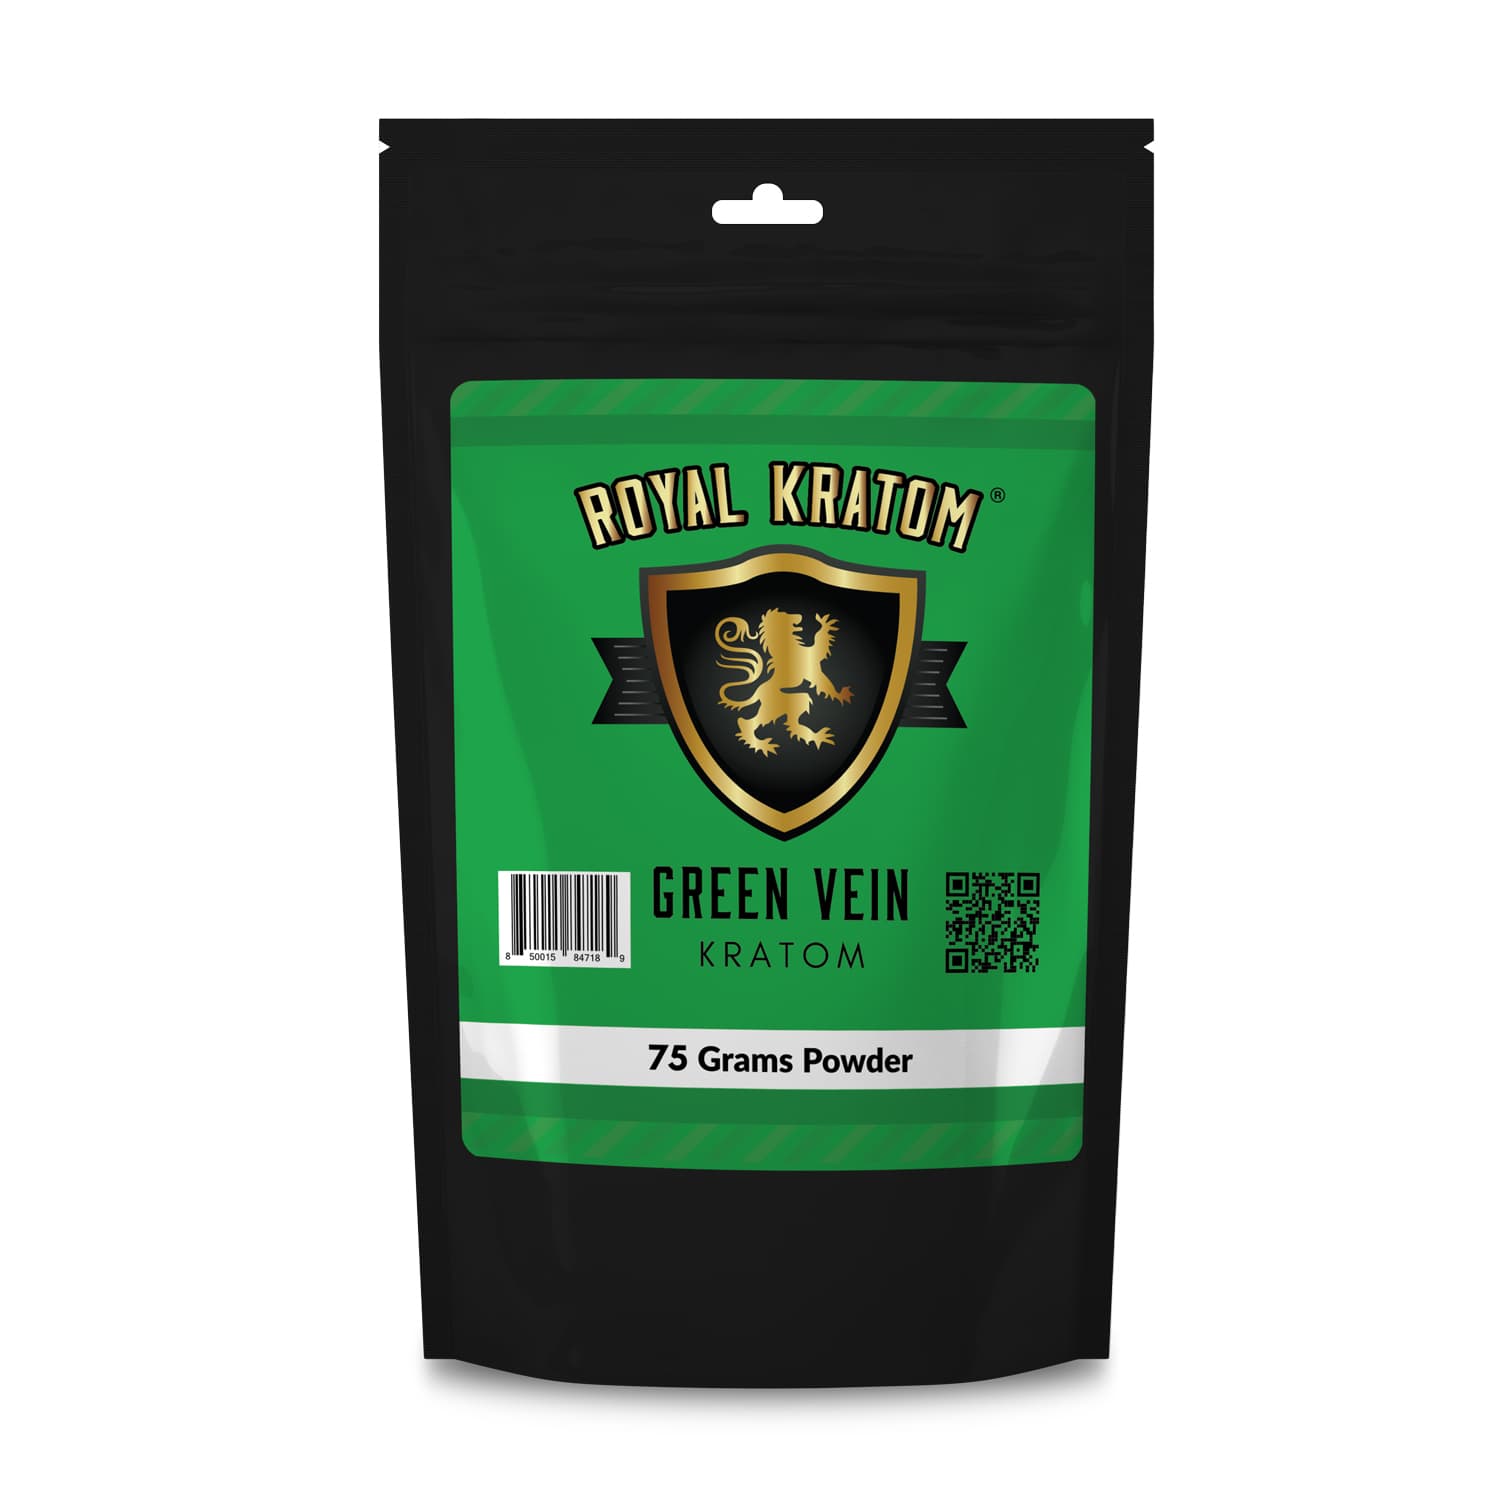 Bag of Royal Kratom green kratom powder